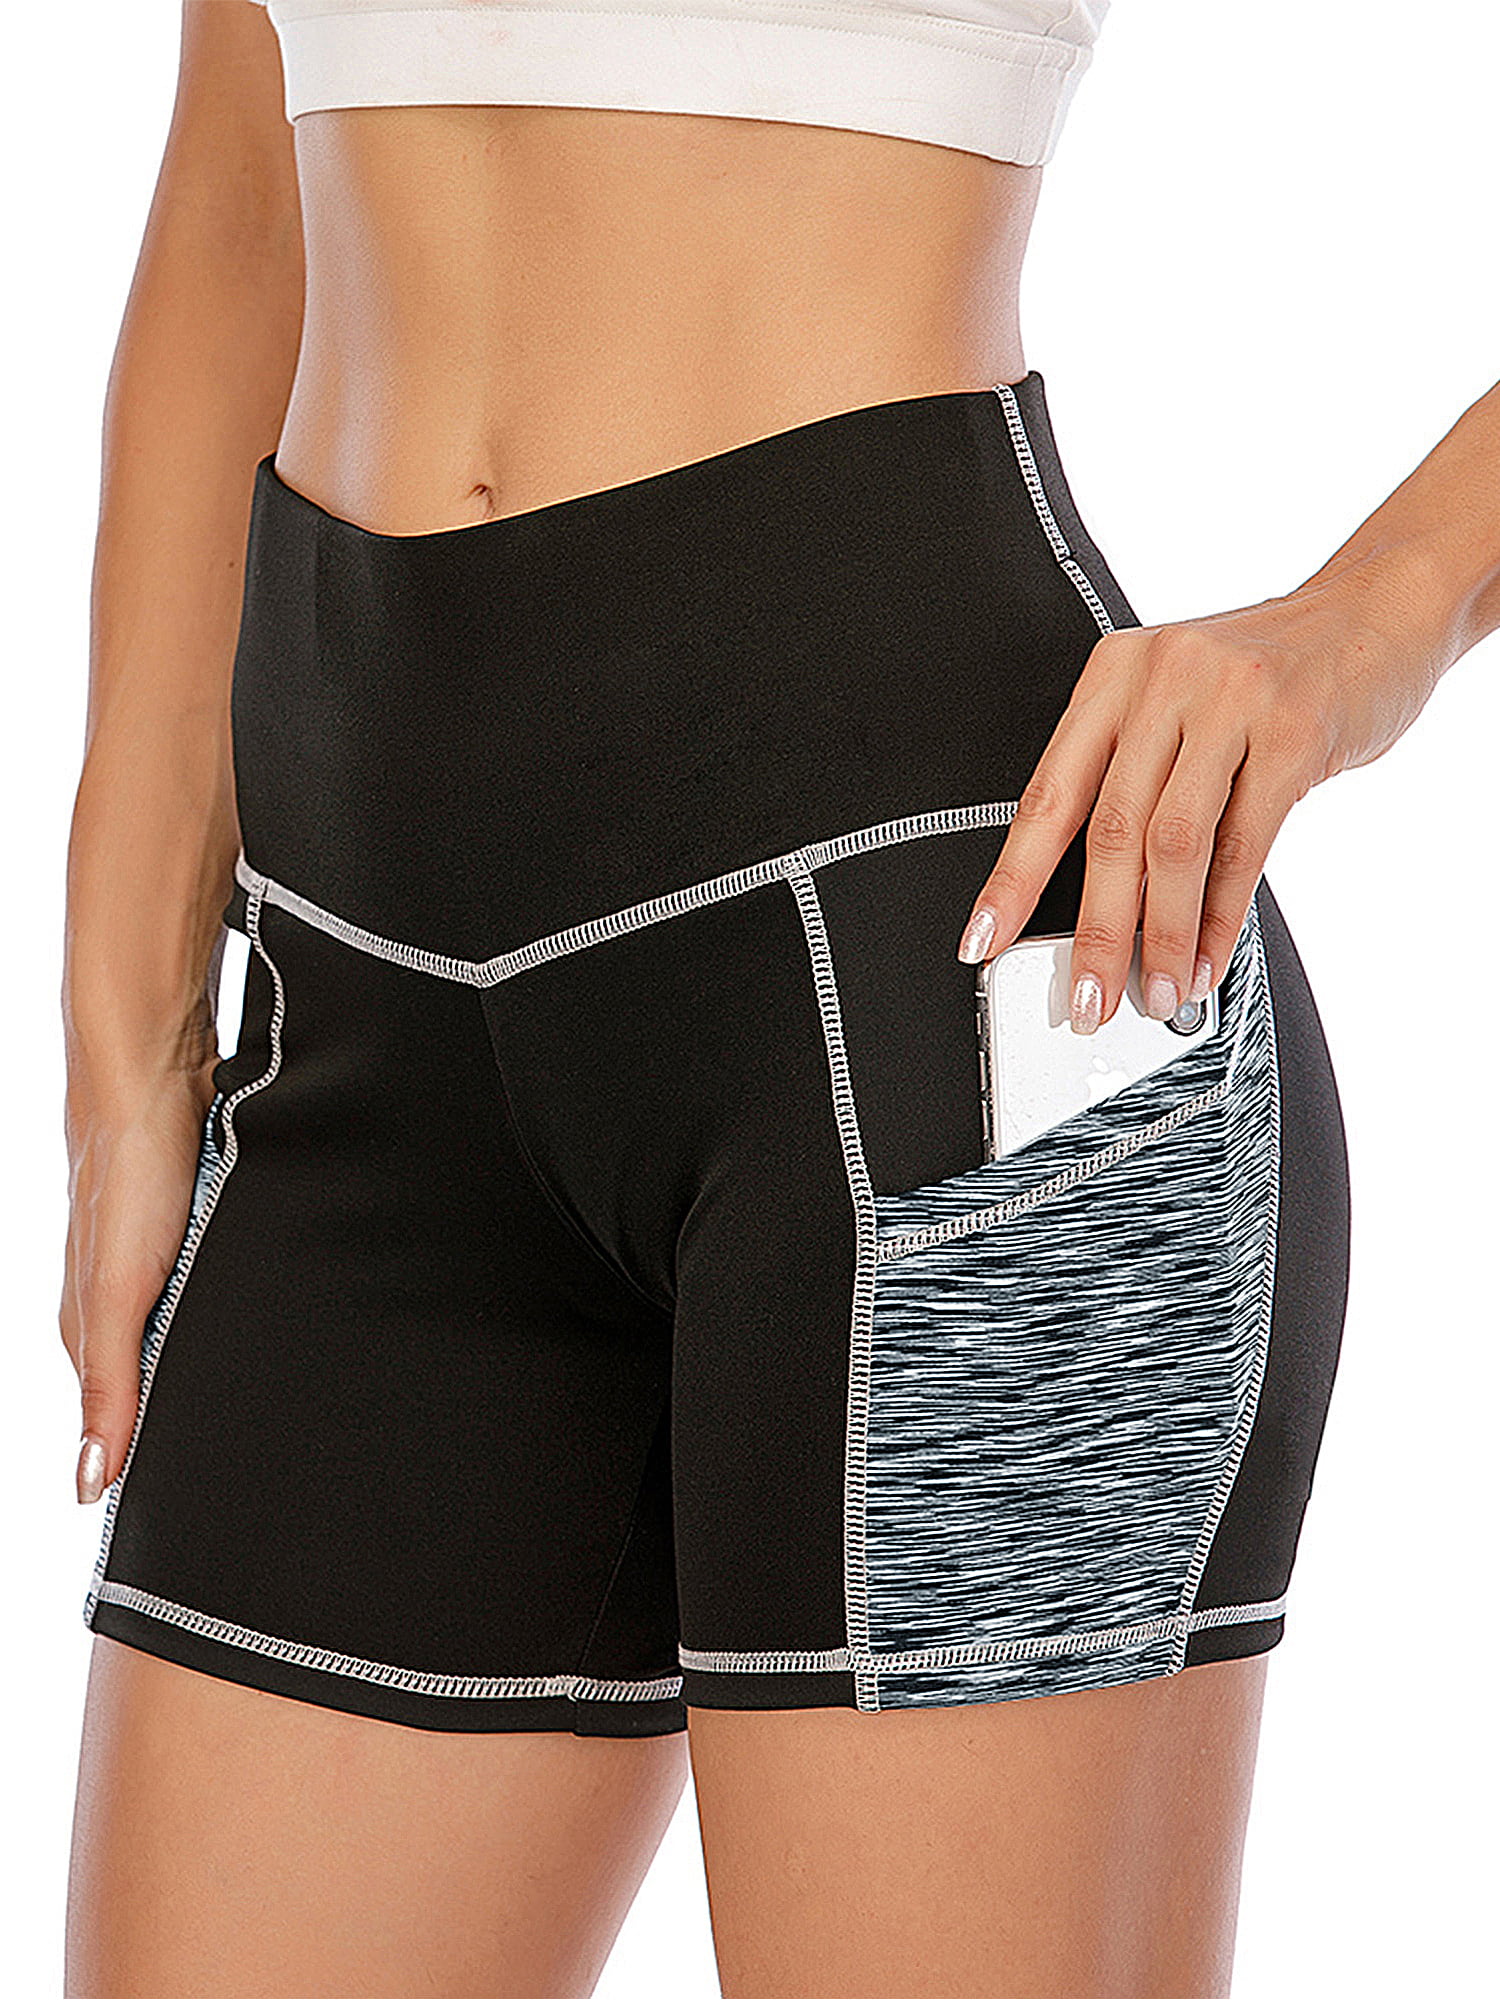 FAFAIR Women High Waist Yoga Shorts Tummy Control Running Shorts Pants with Side Pockets